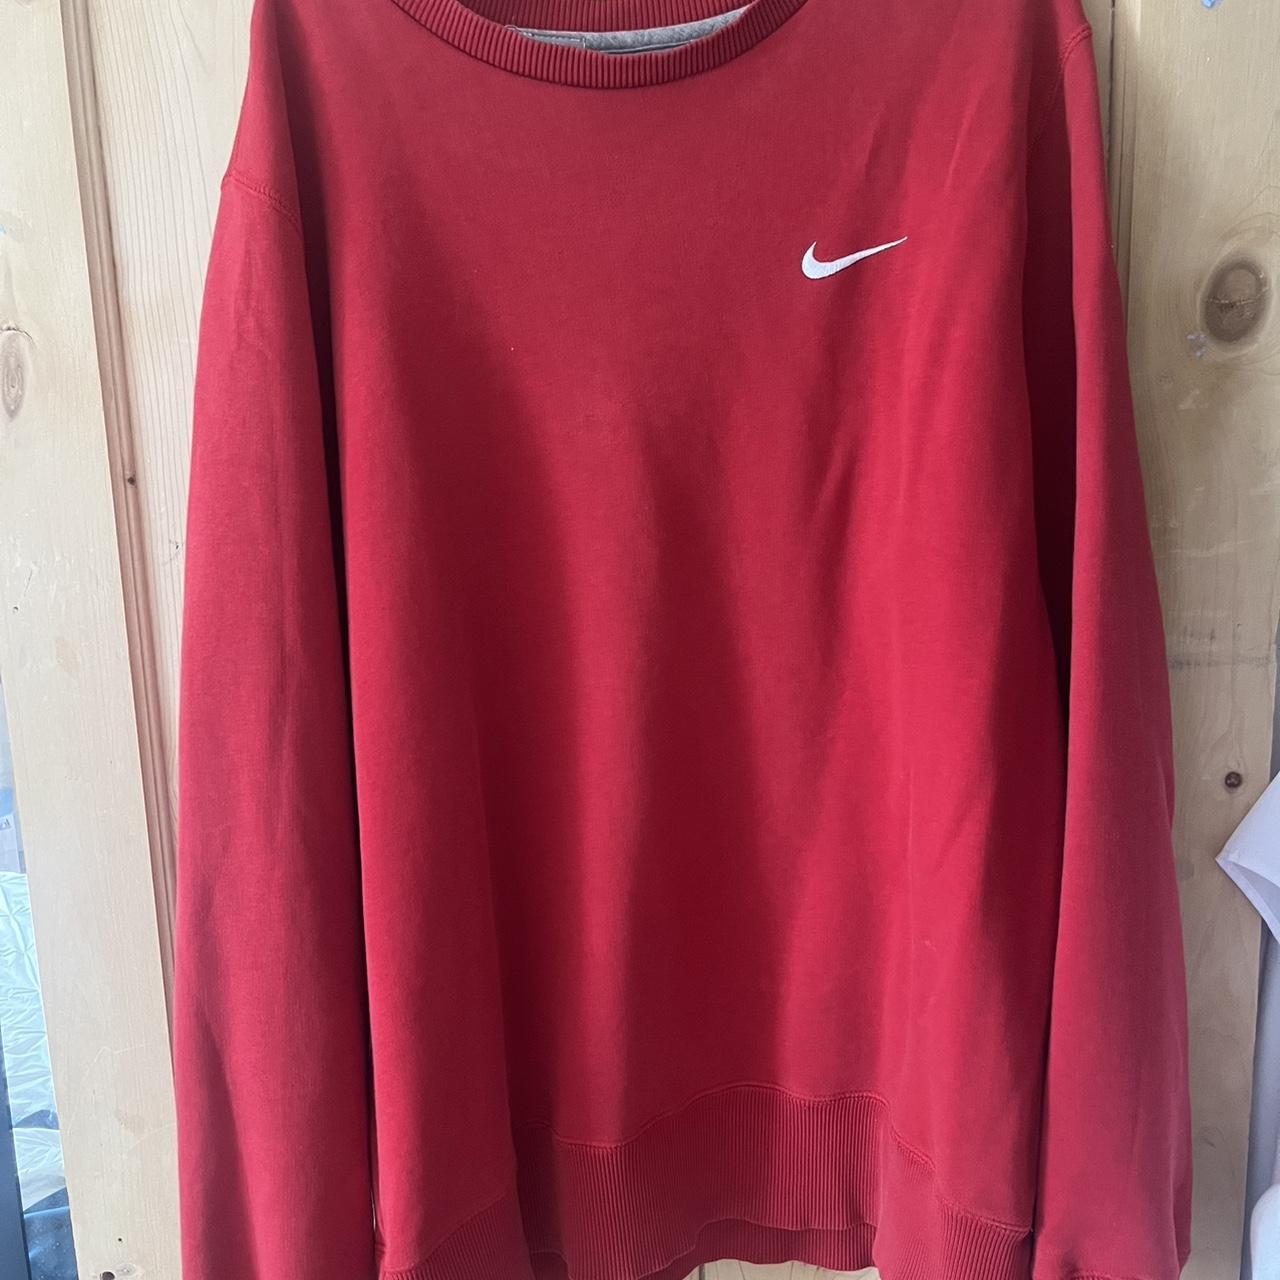 Vintage Nike red sweatshirt, excellent condition,... - Depop